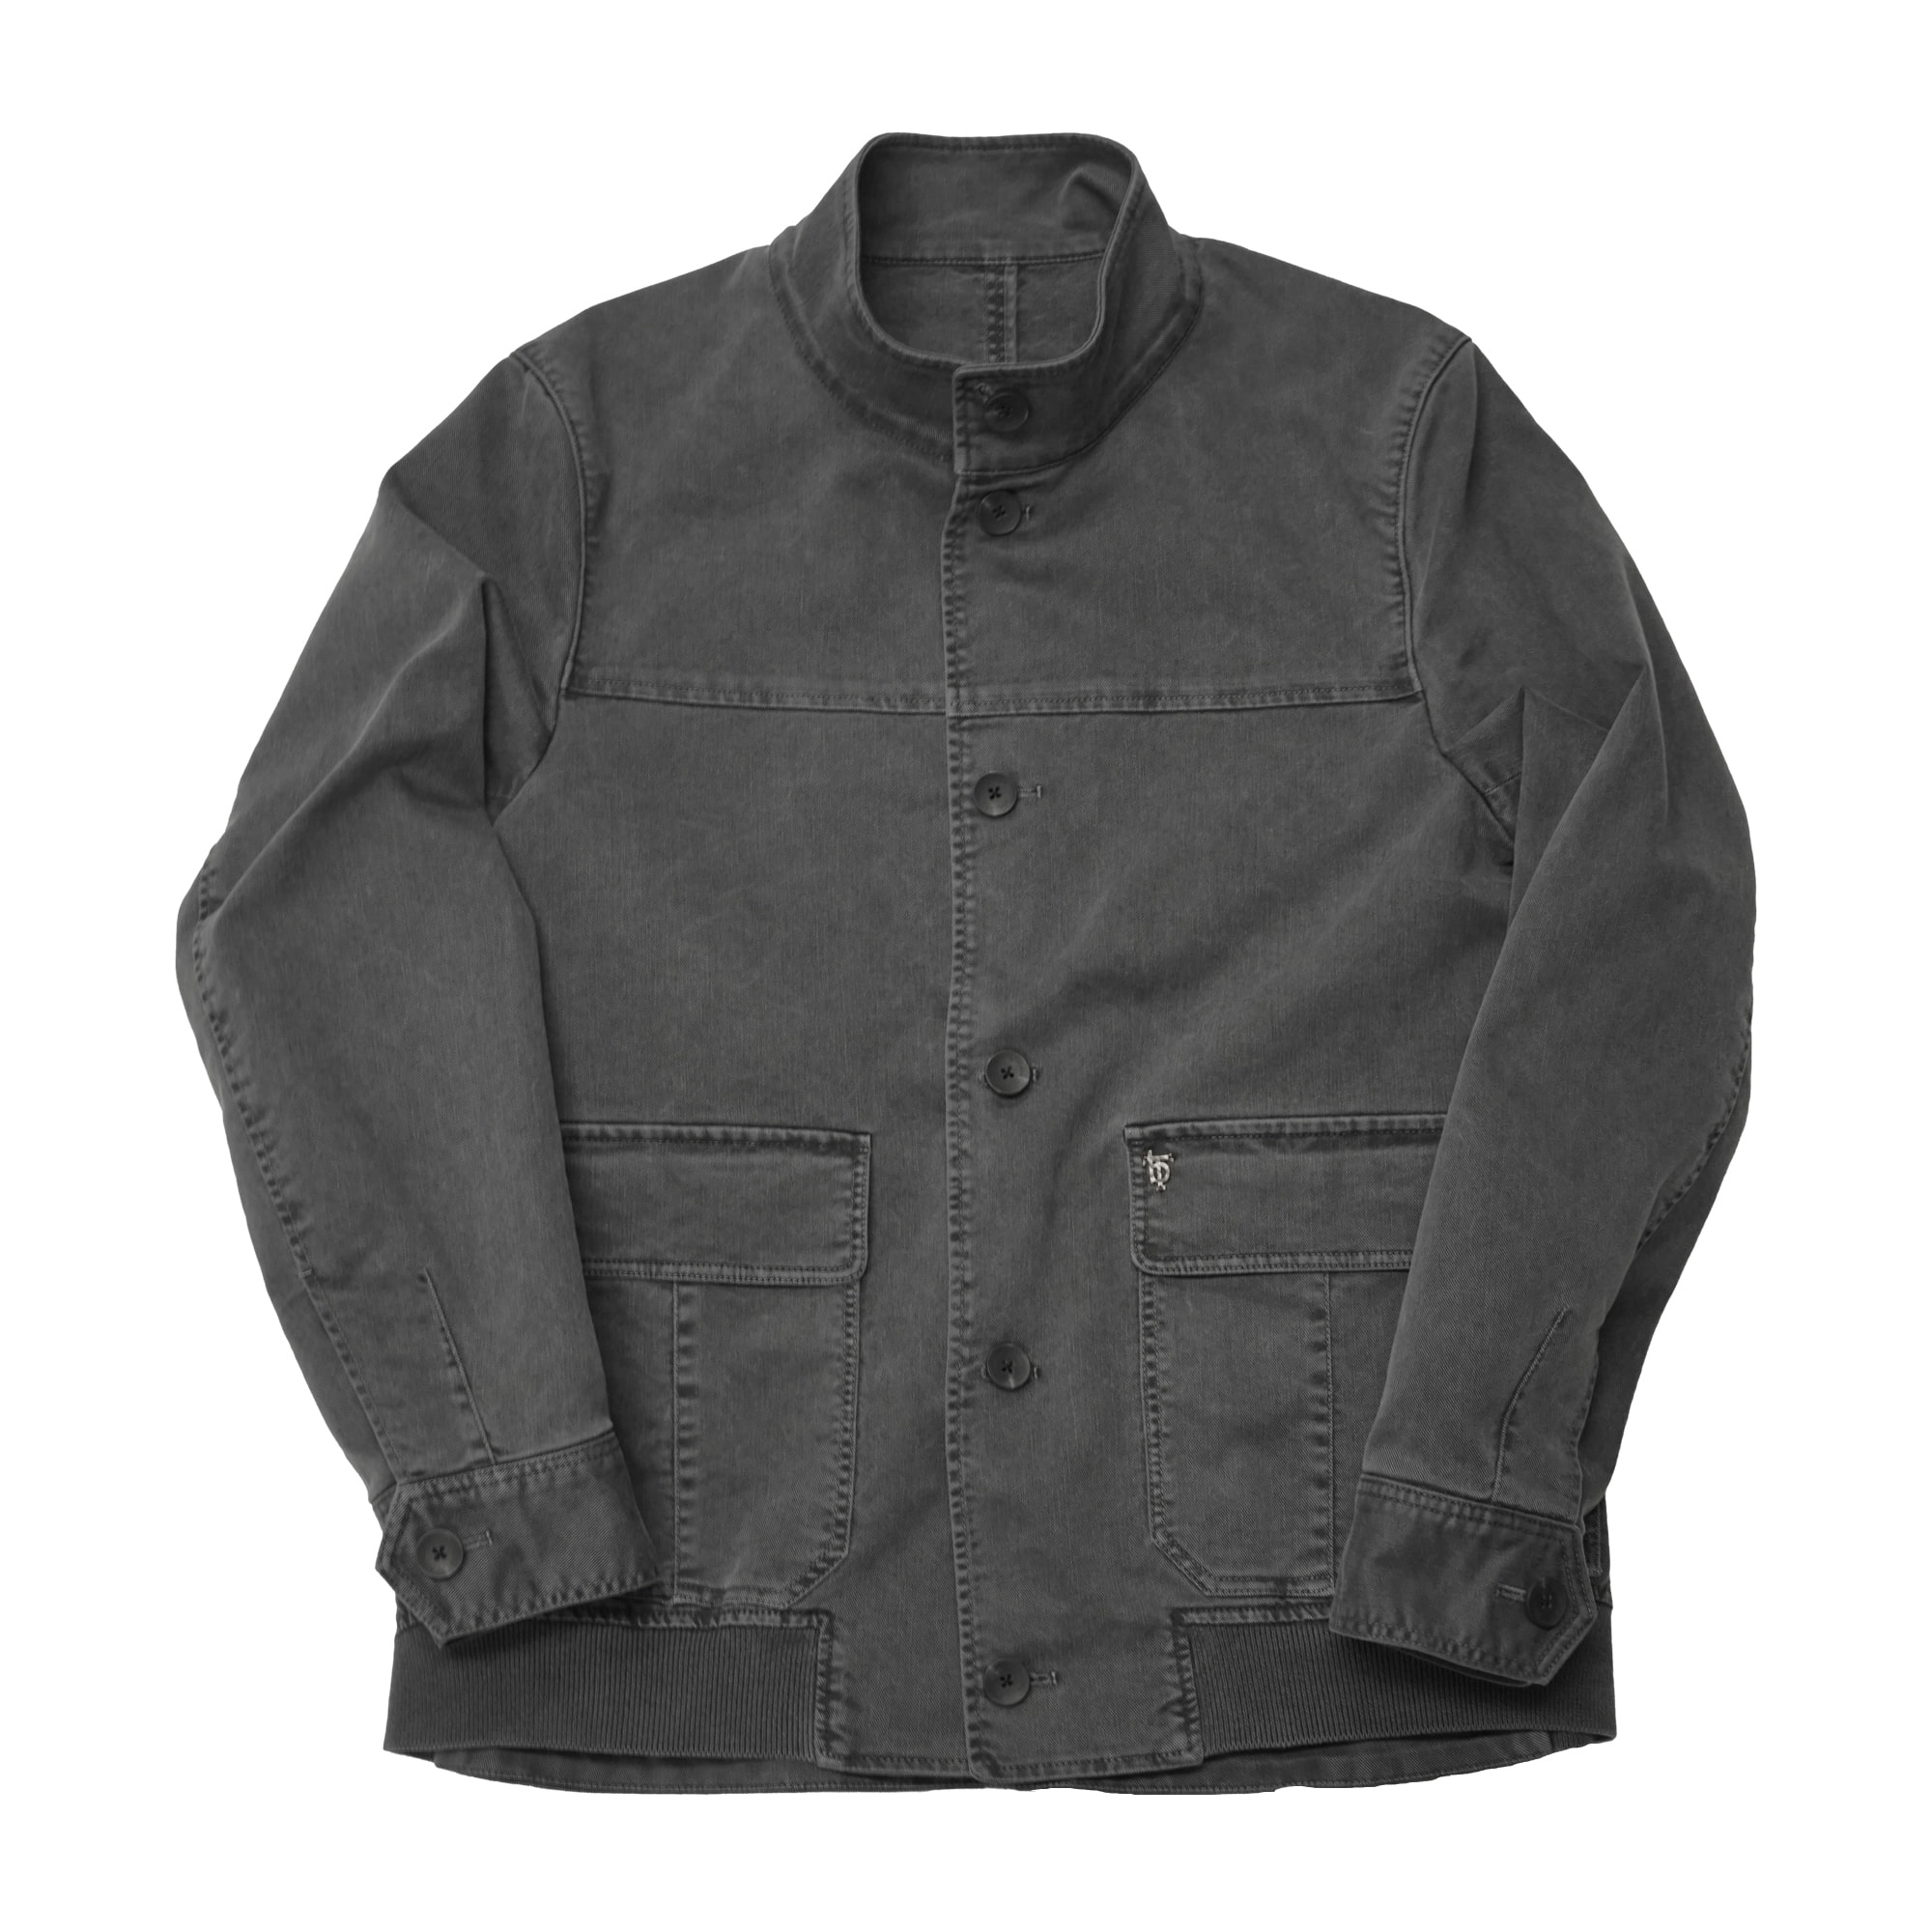 NTB half jumper jacket - greyBIRBANTE(비르반테)